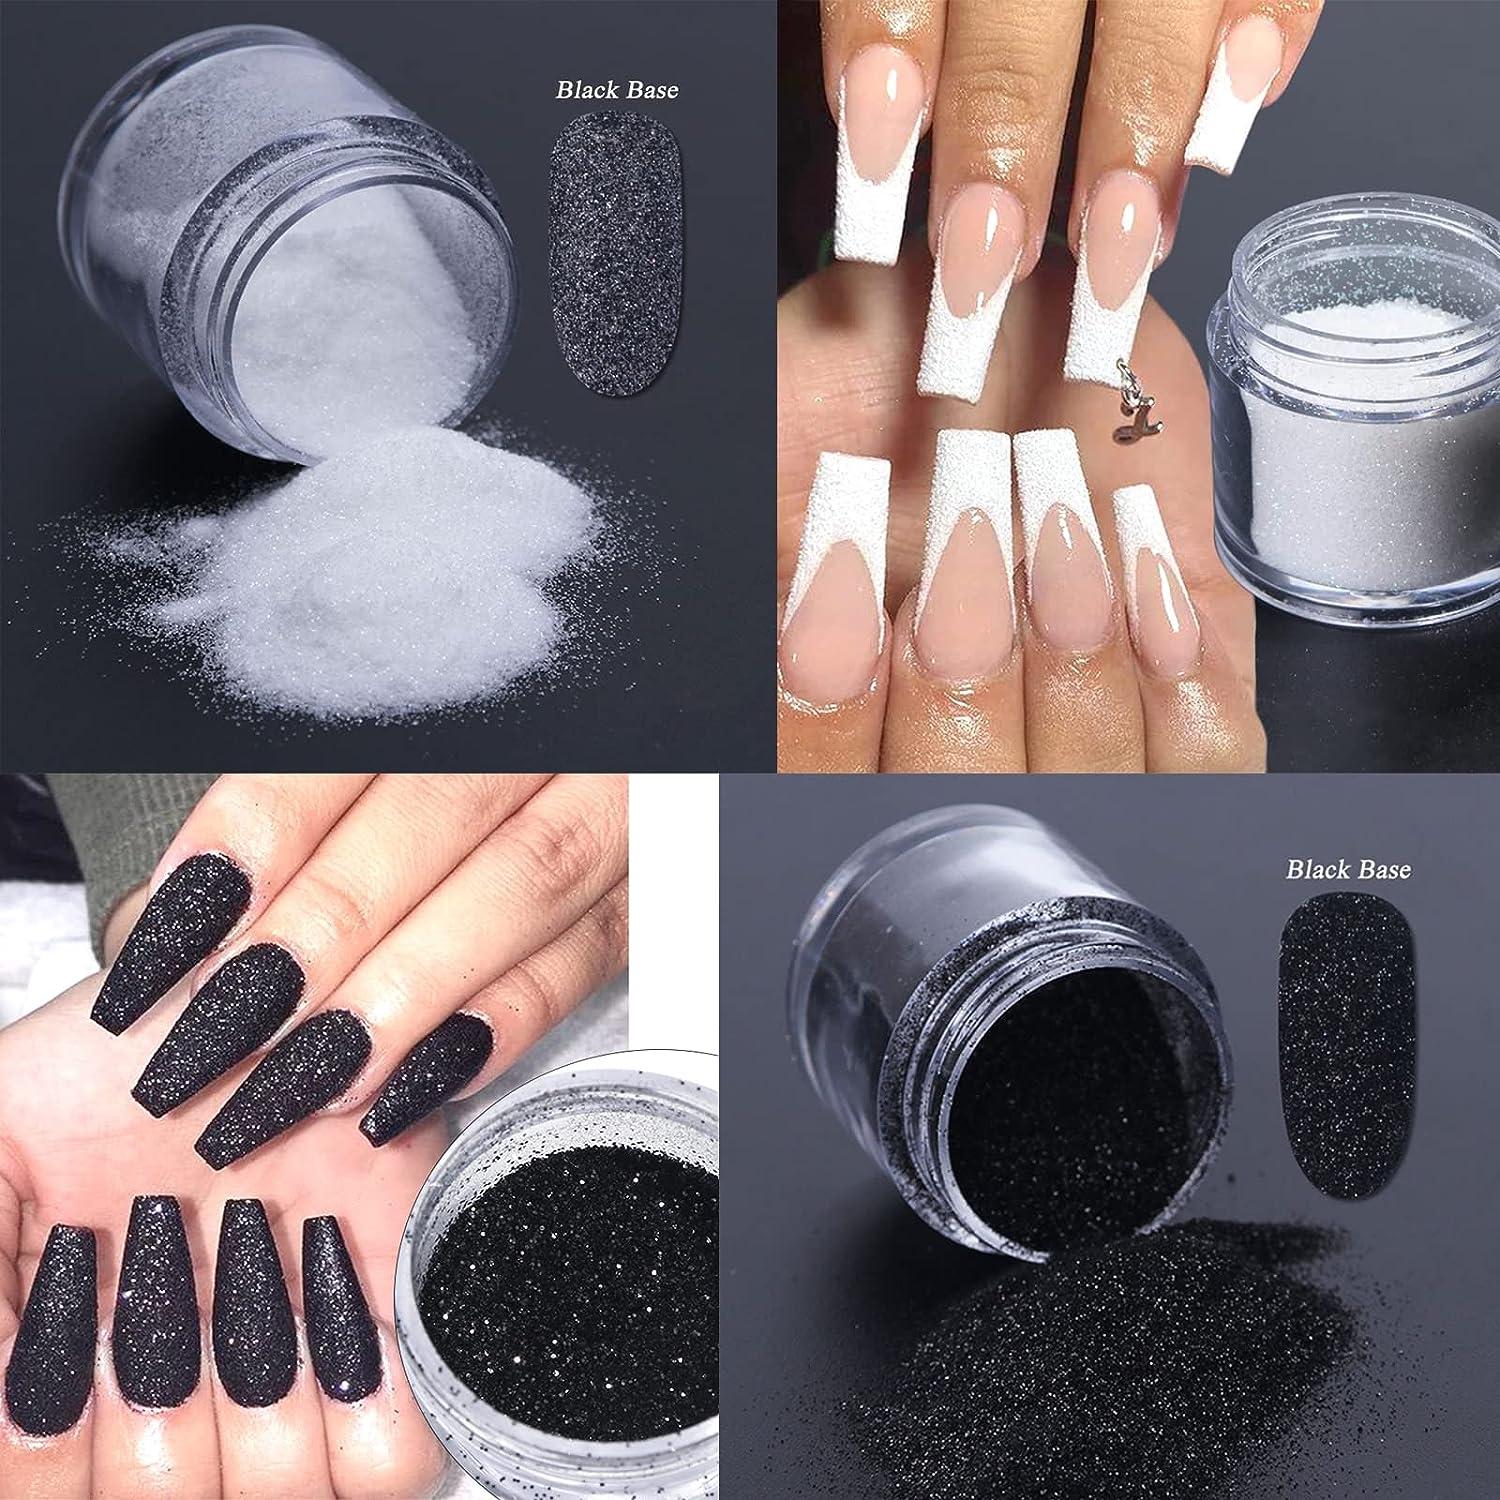 Star Dust : Glitter Nail Polish Designs On Black Shiny Nails 